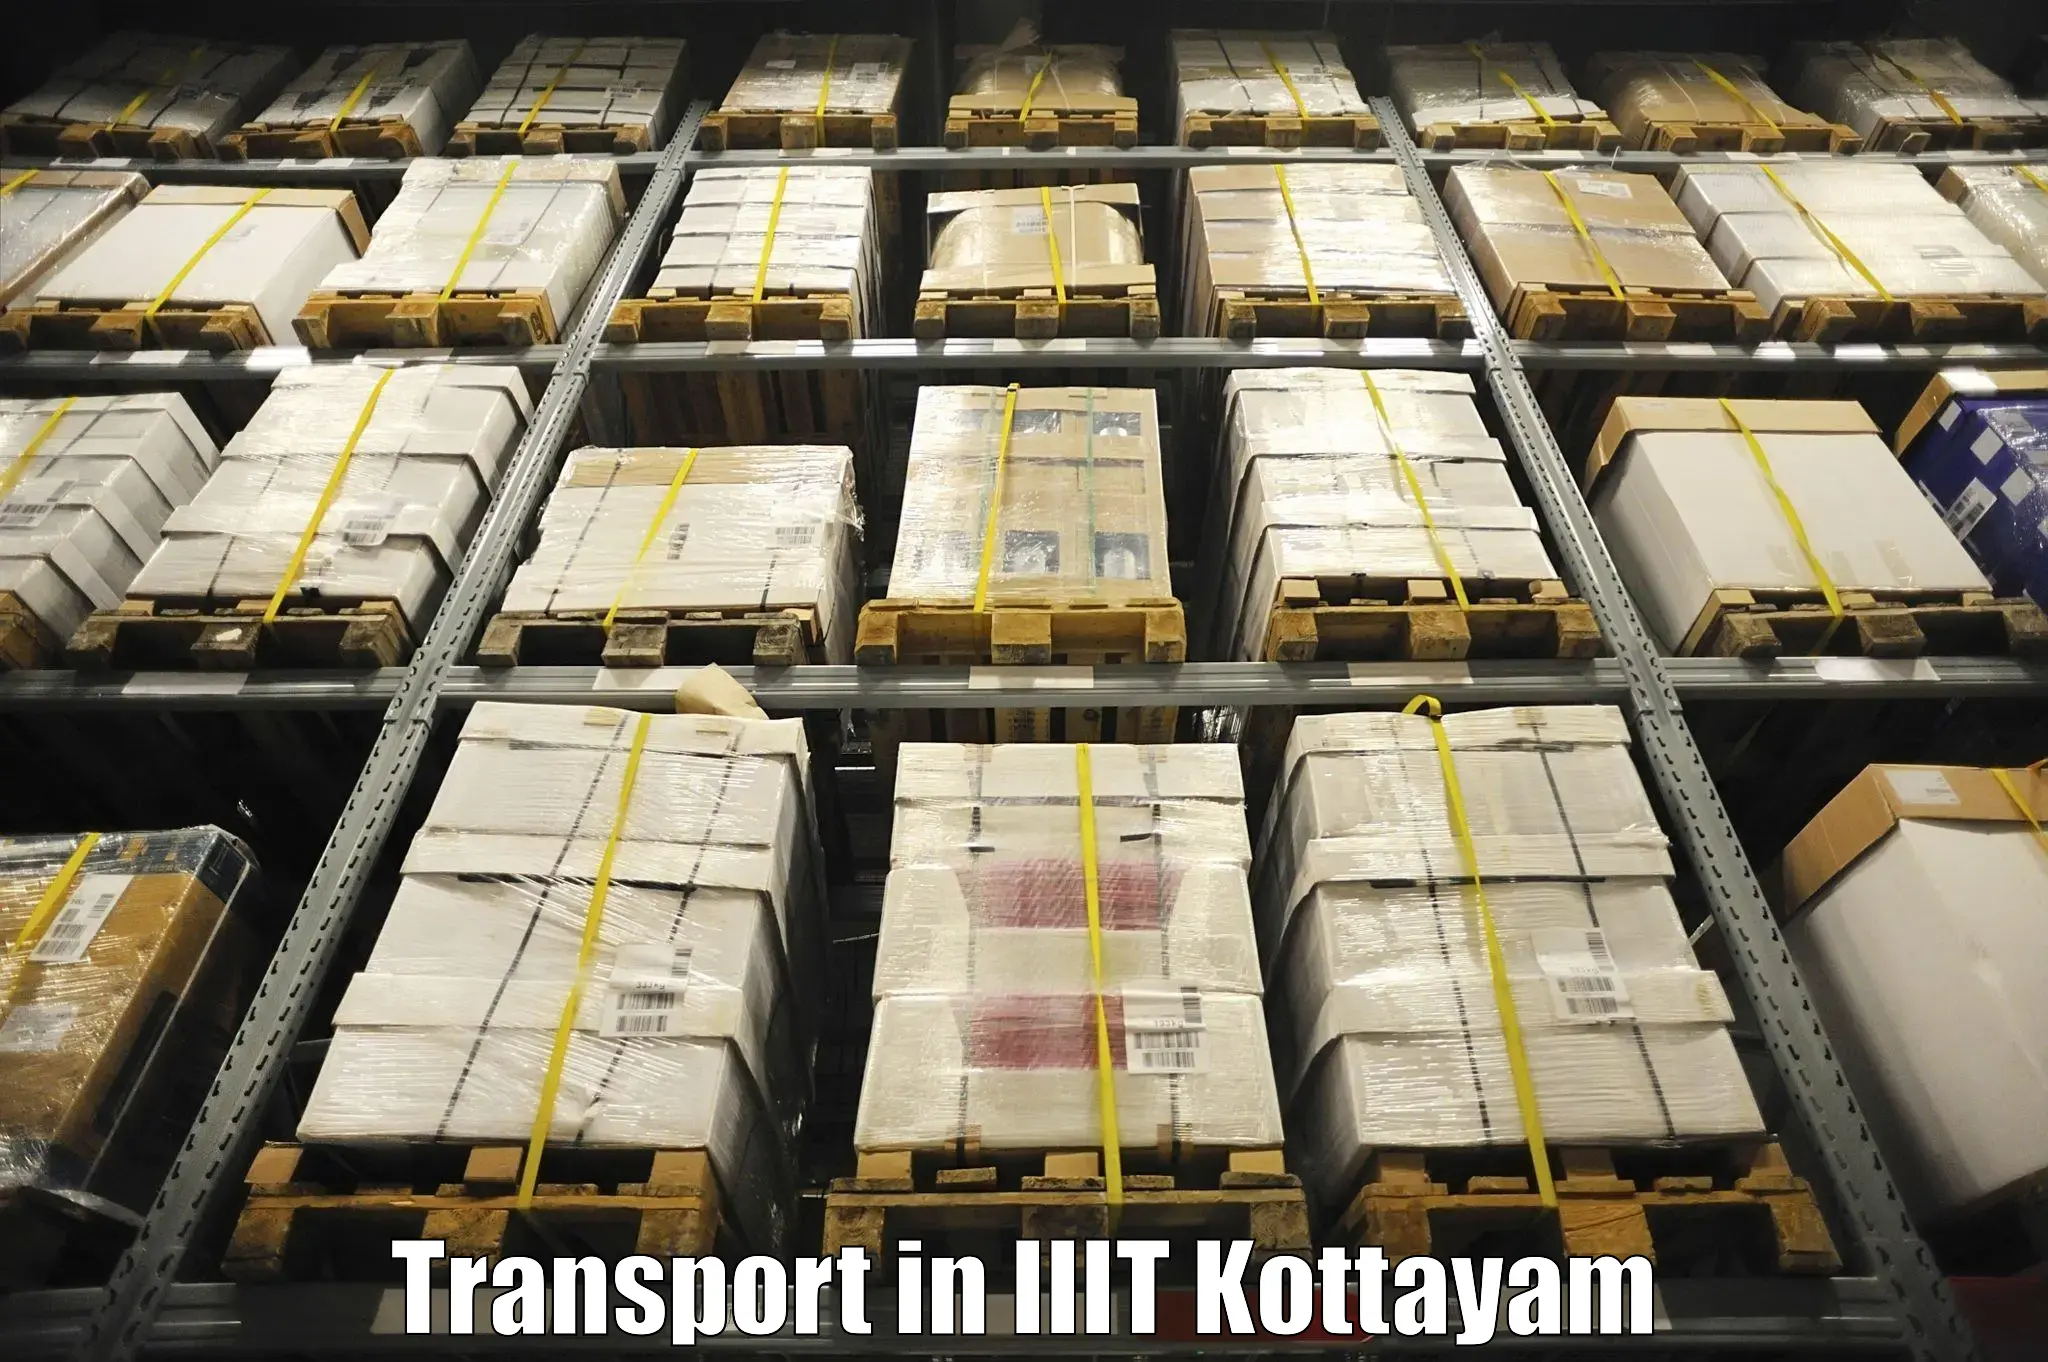 Transport in sharing in IIIT Kottayam